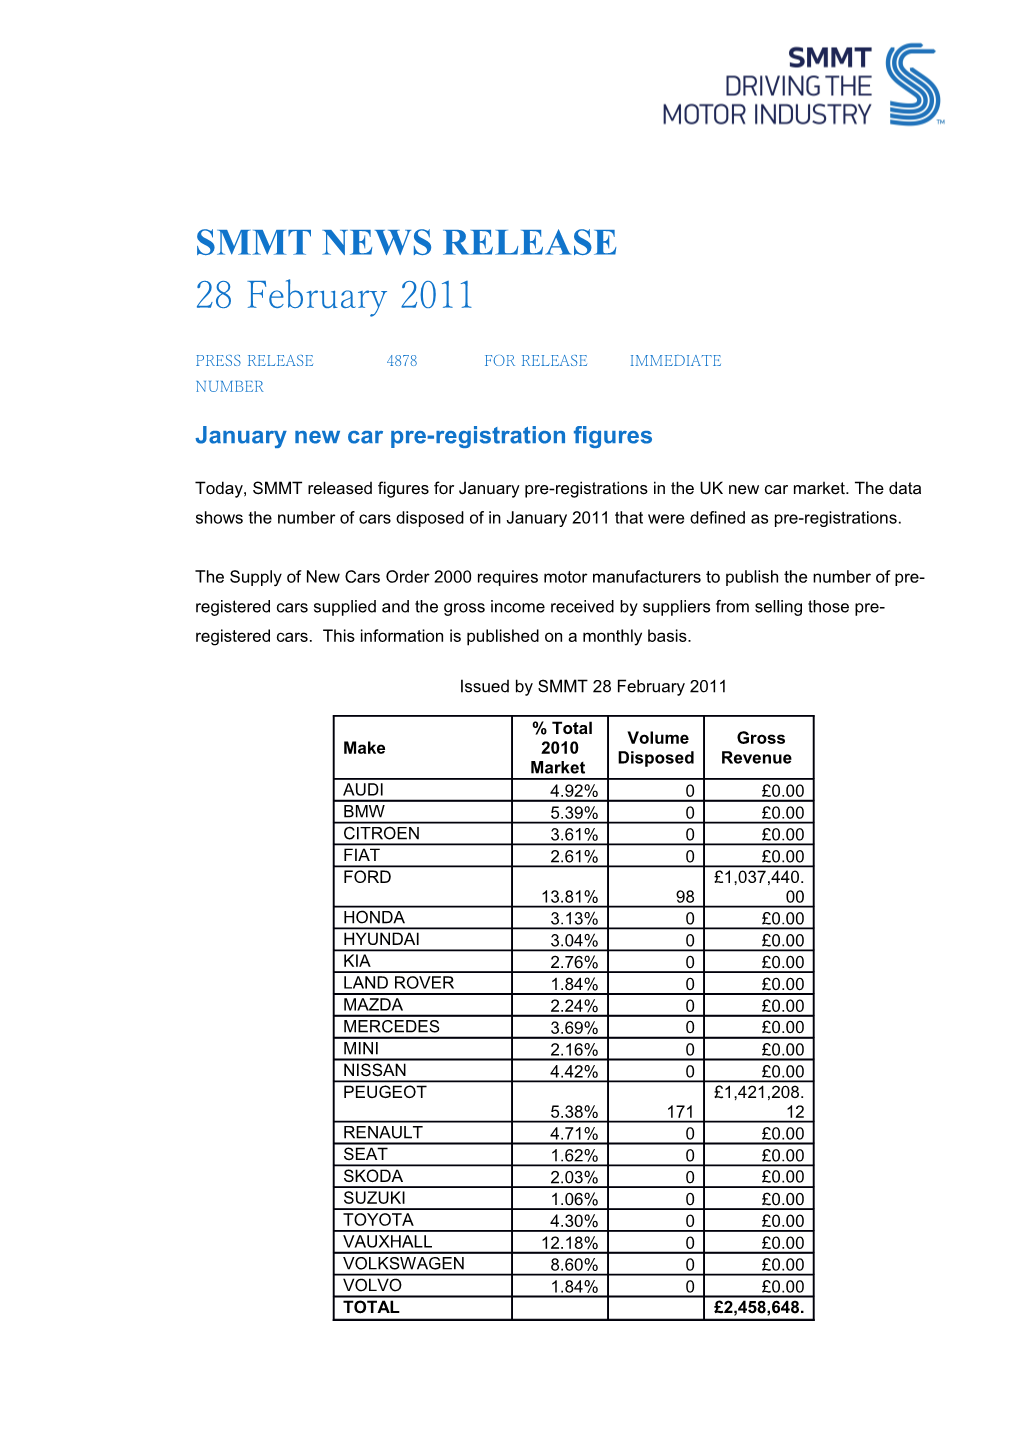 January New Car Pre-Registration Figures